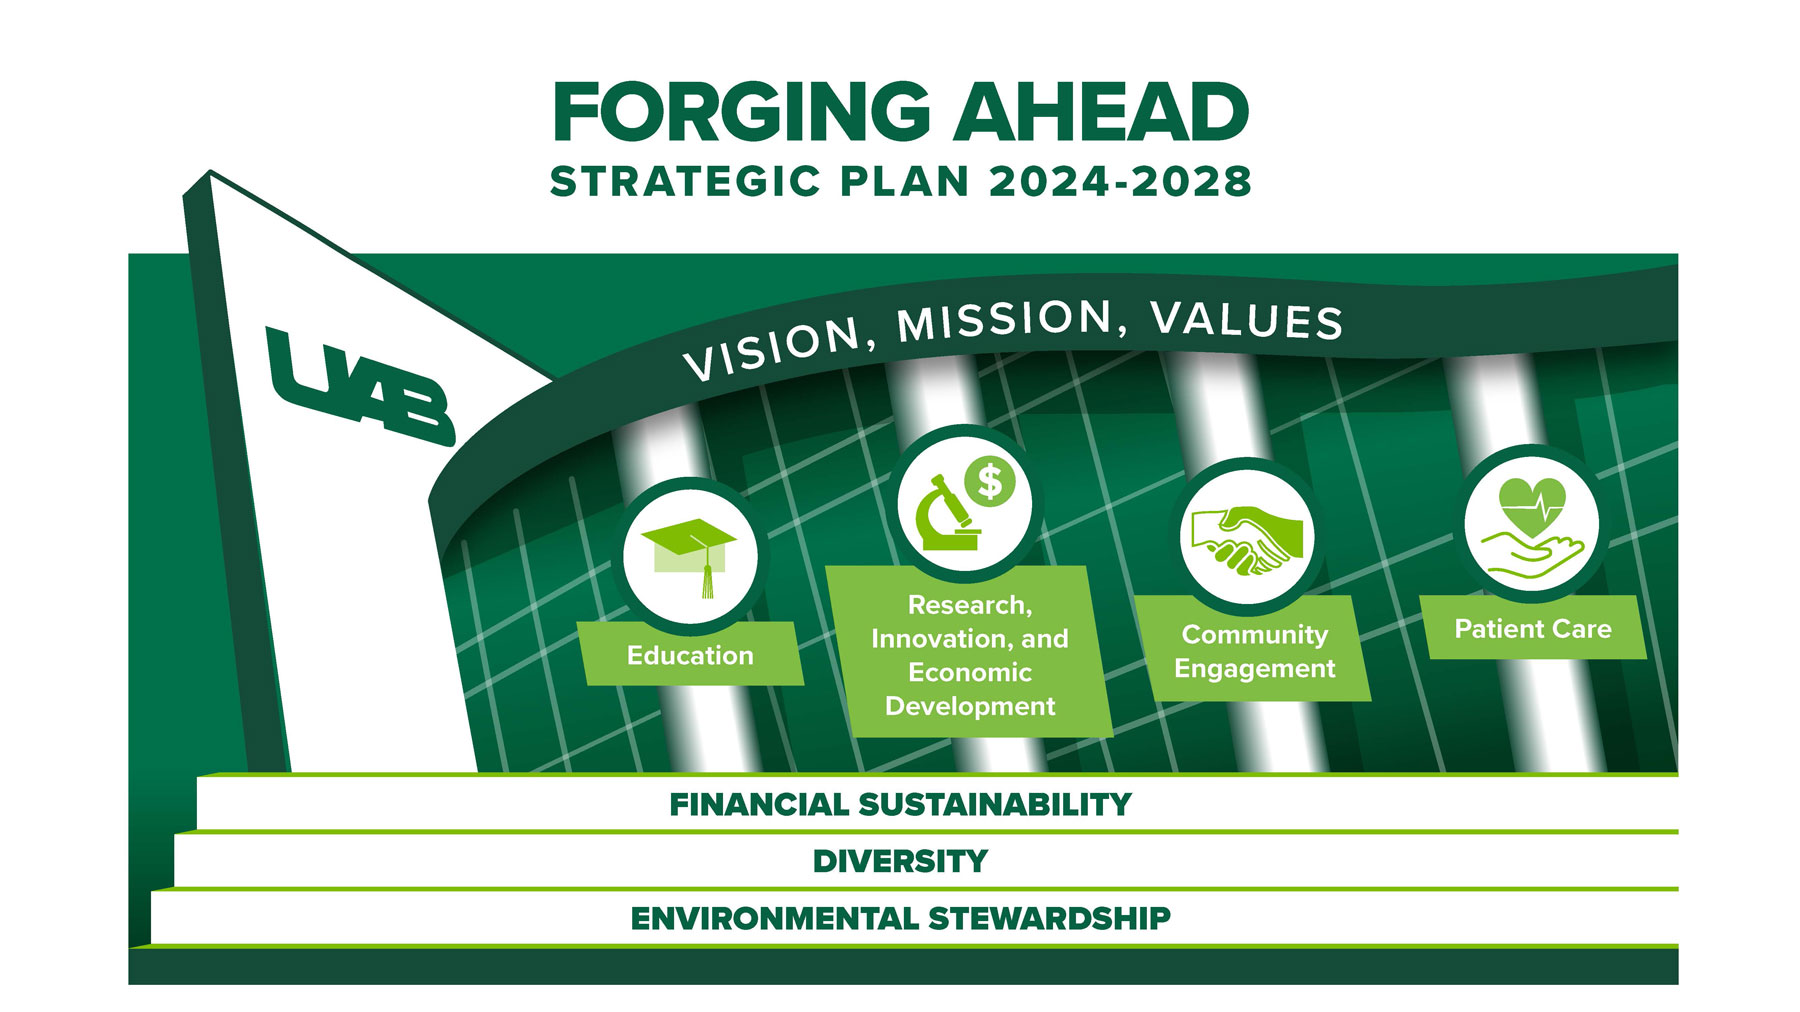 Strategic Plan Forging Ahead 2024-2028